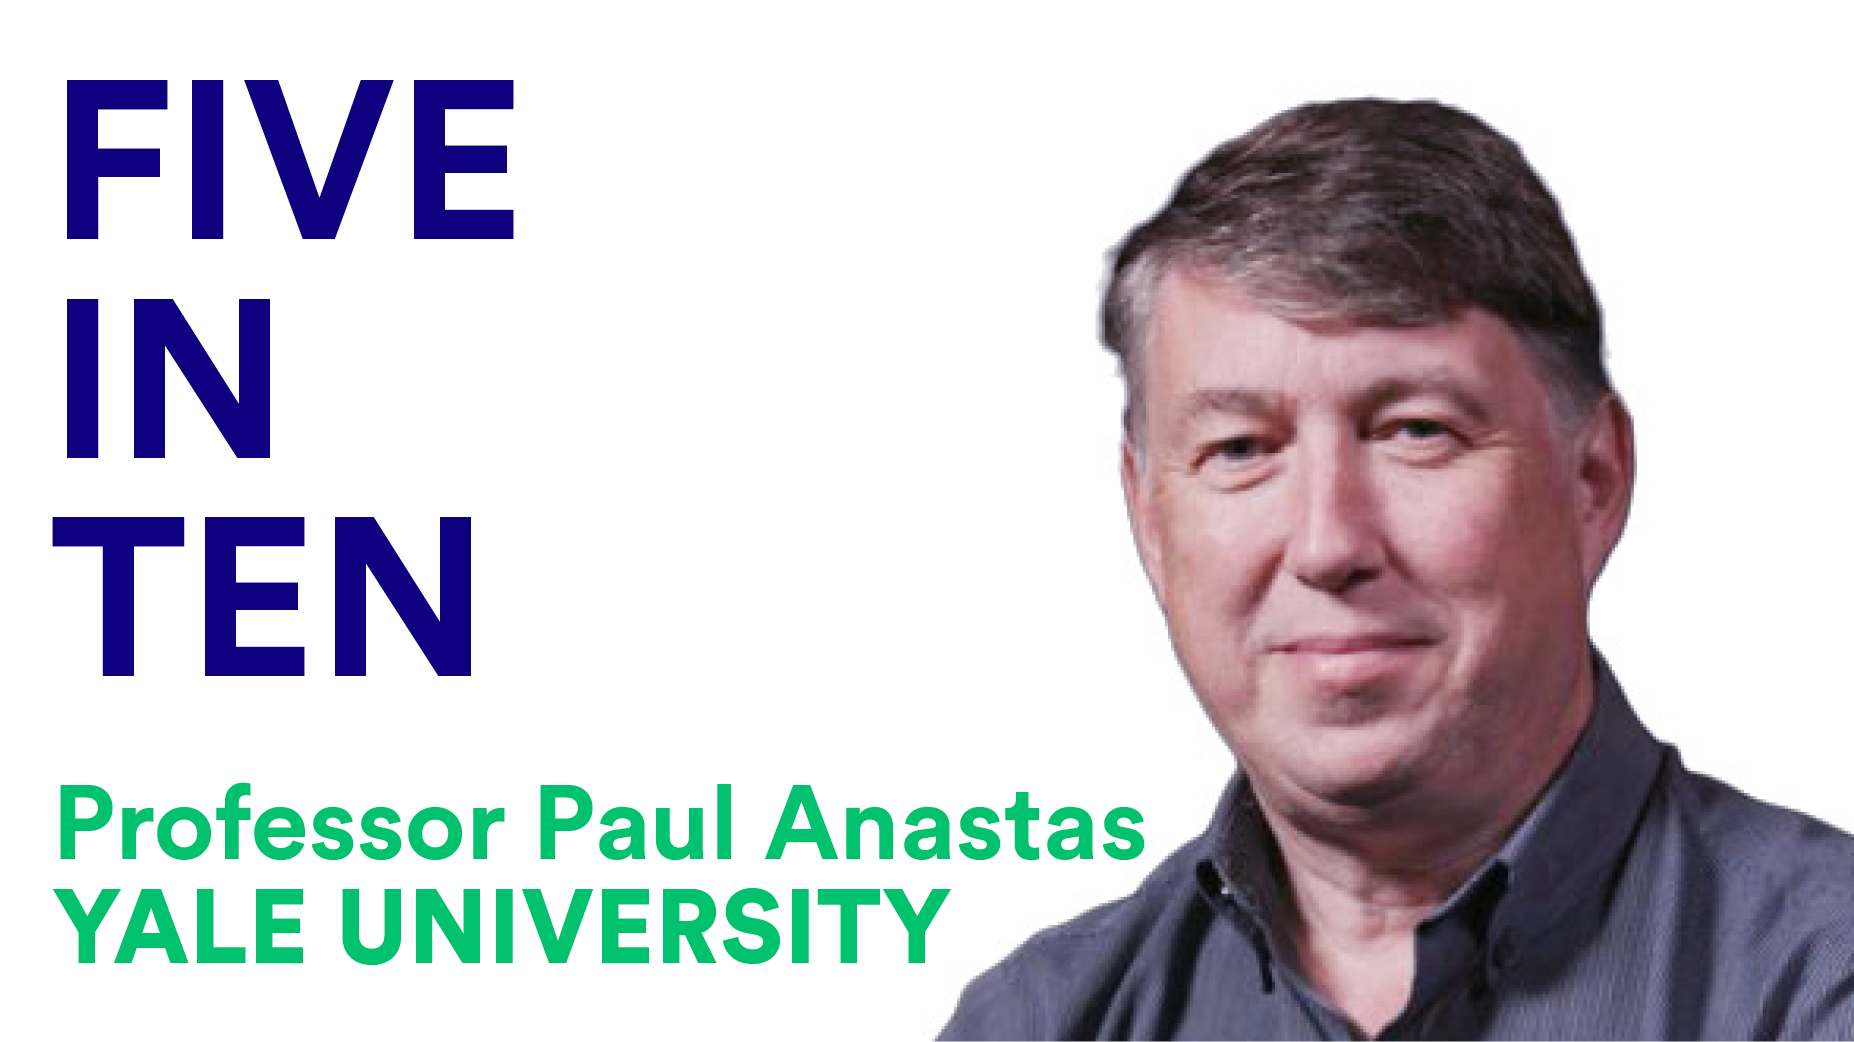 Professor Paul Anastas on the role of green chemistry